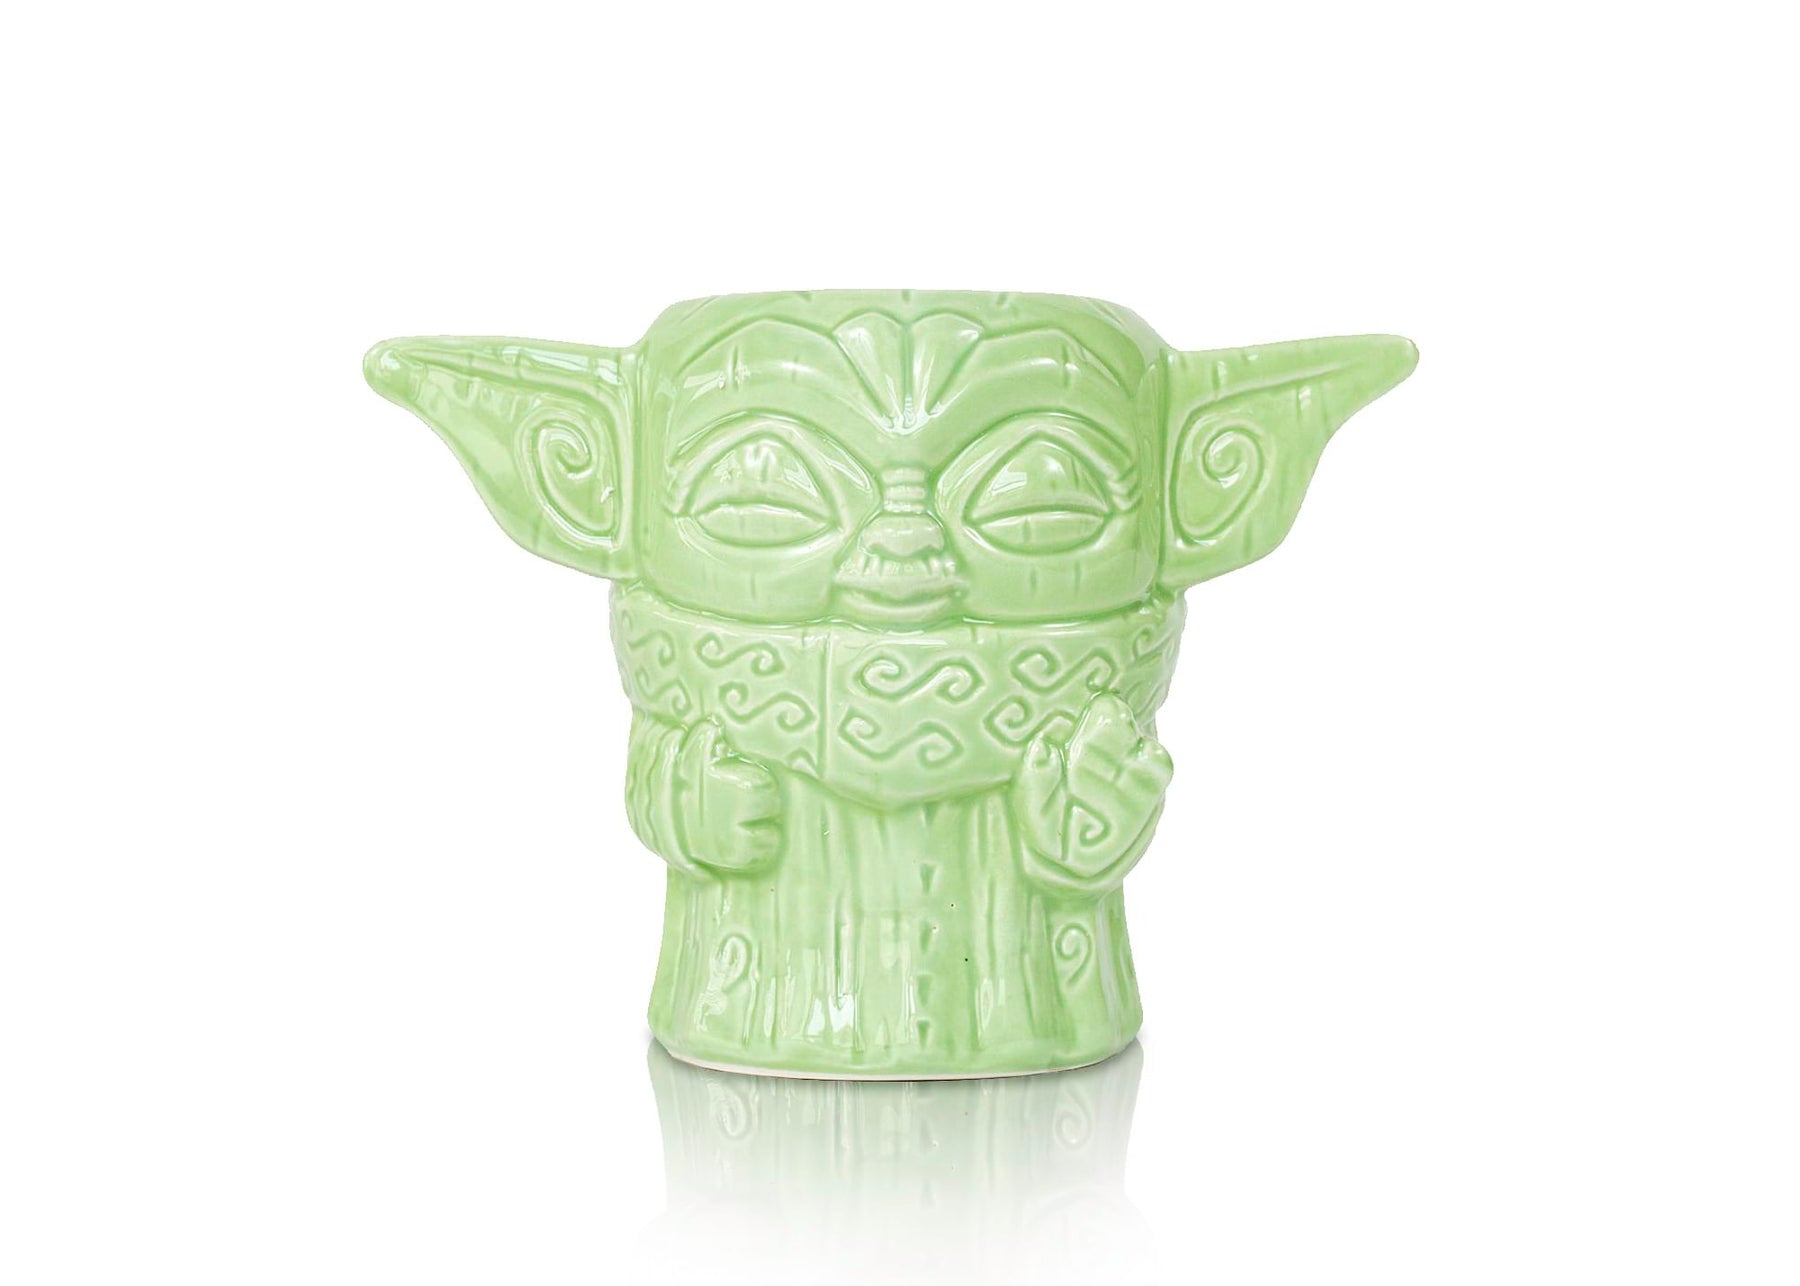 Geeki Tikis The Child "Baby Yoda" Force Pose Mug | Star Wars: The Mandalorian | 16 Ounces